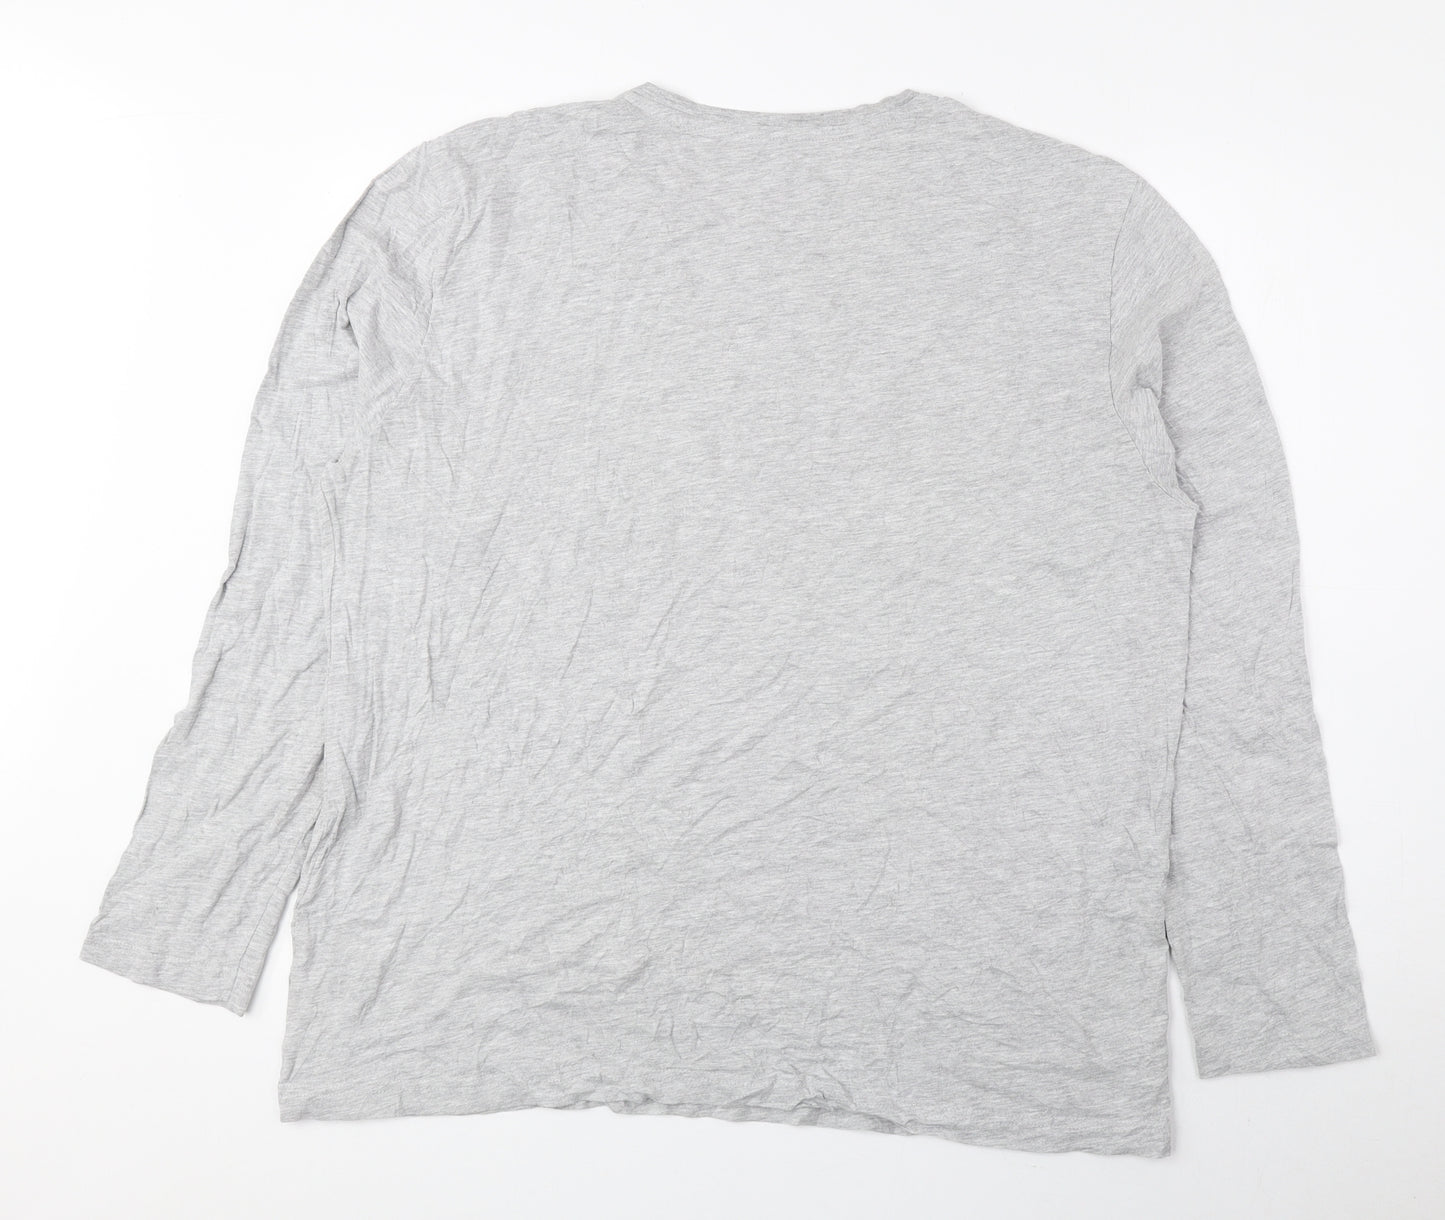 Ostin Mens Grey Polyester T-Shirt Size 2XL Round Neck